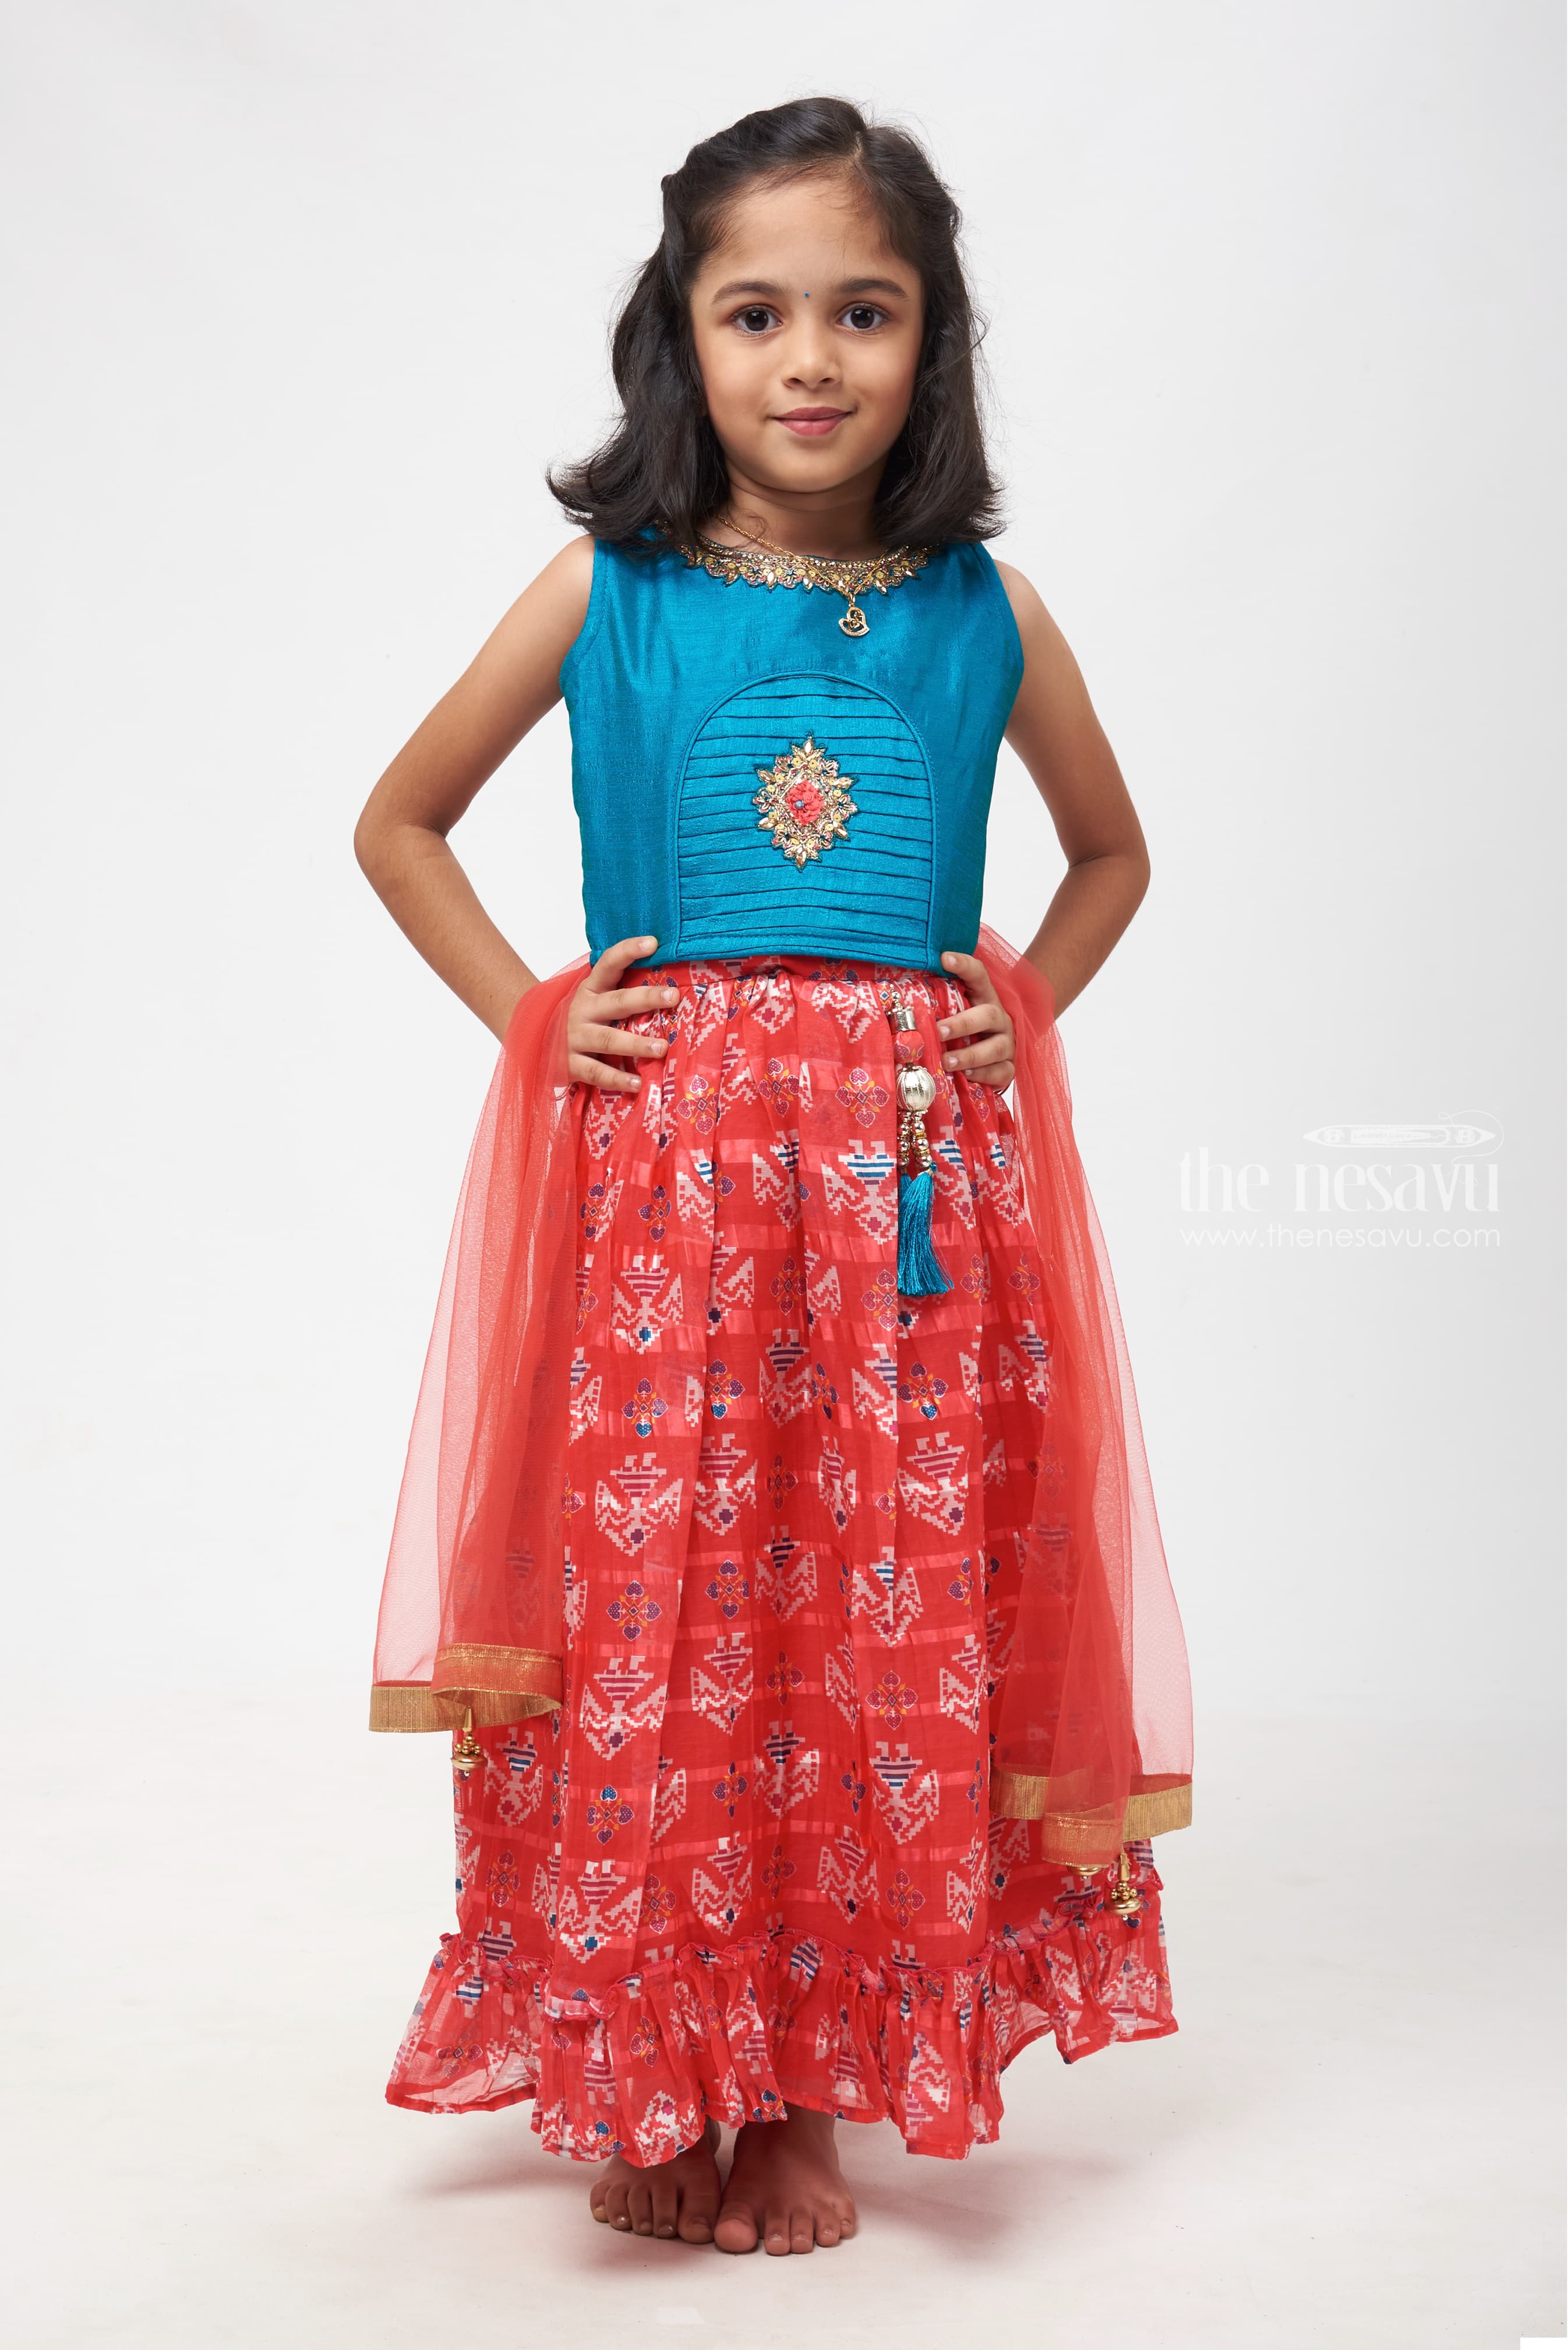 Crop top with floral lehenga | Kids dress patterns, Kids dress, Baby lehenga